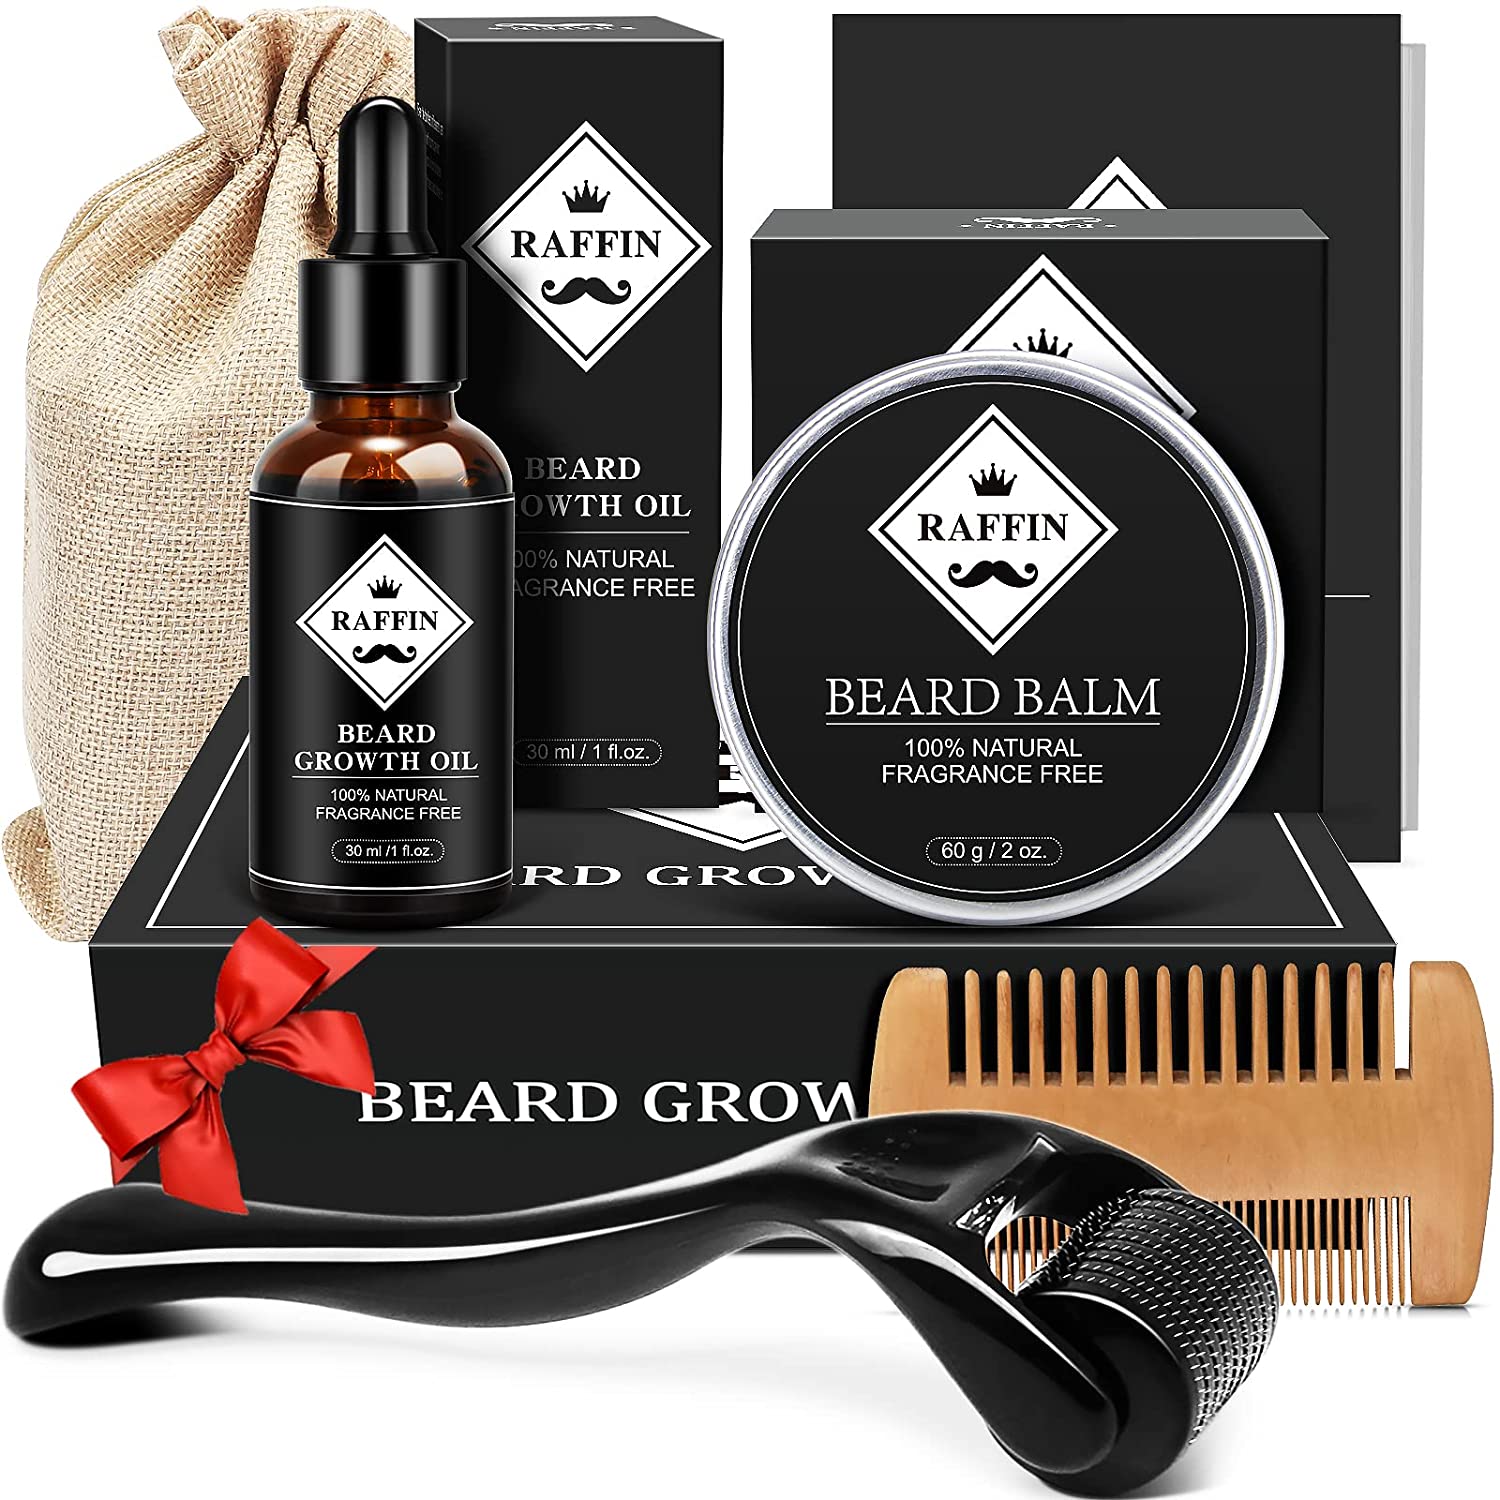  Raffin Beard Growth Kit